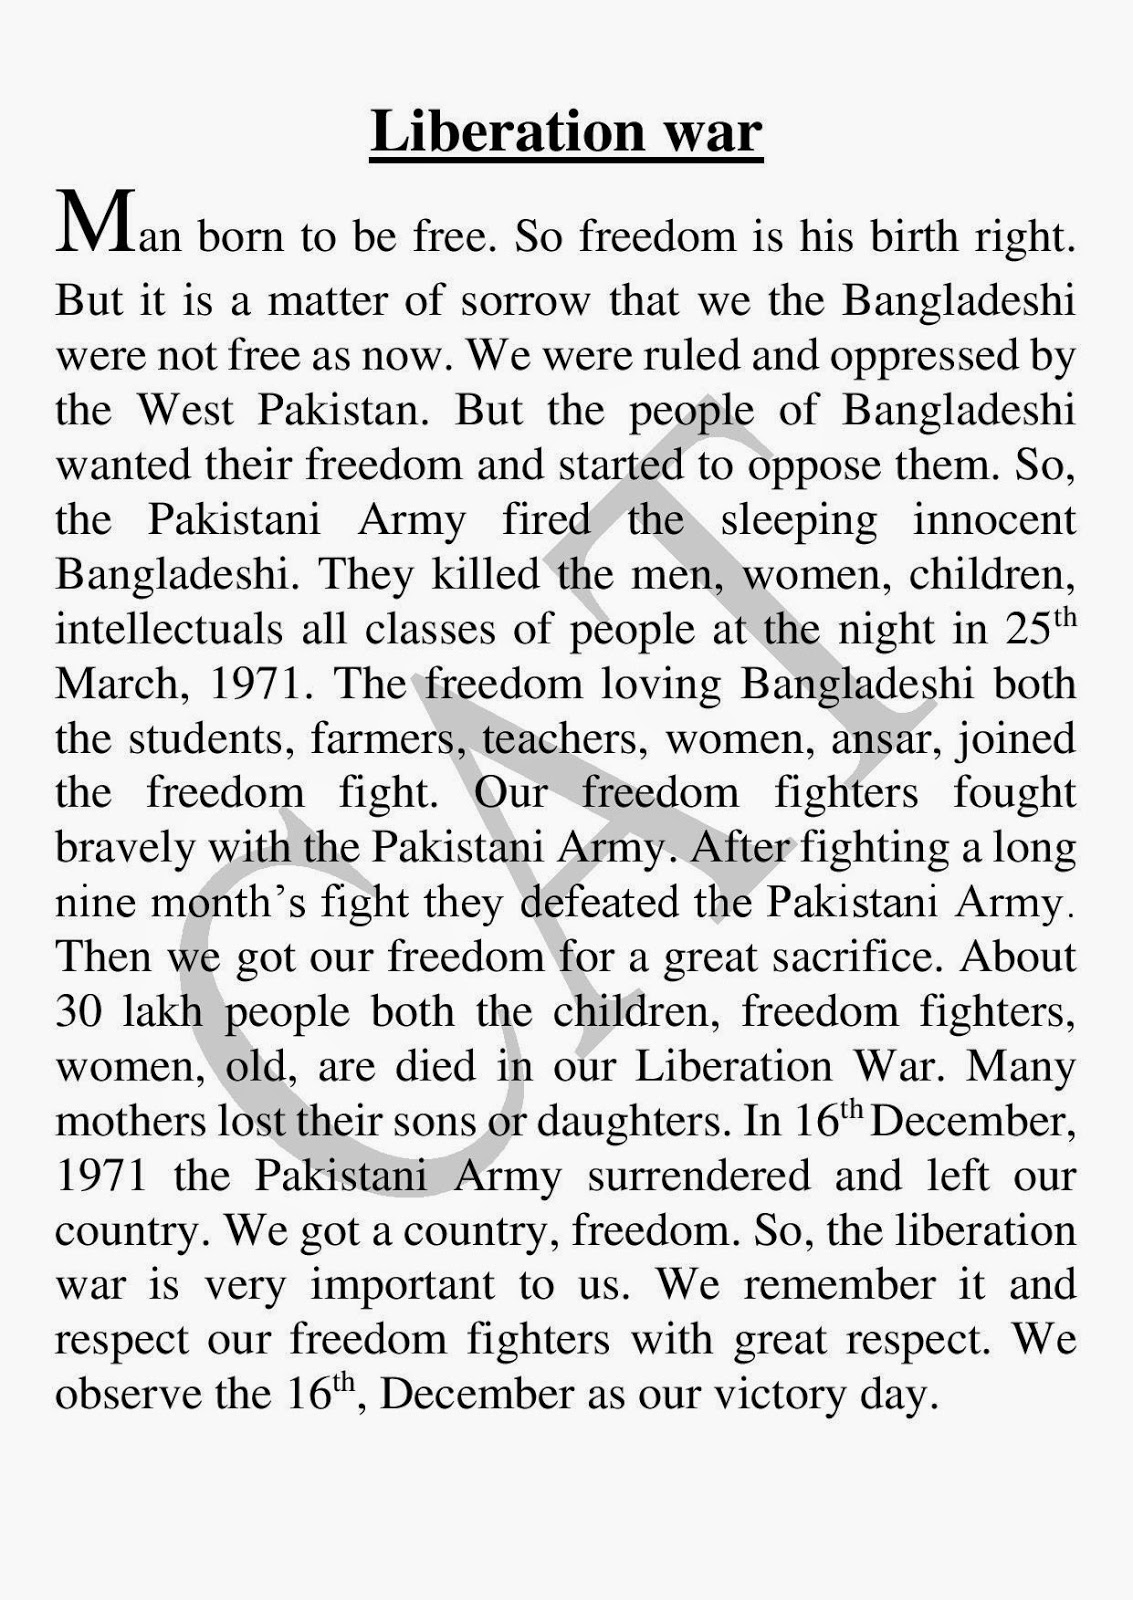 essay on liberation war of bangladesh